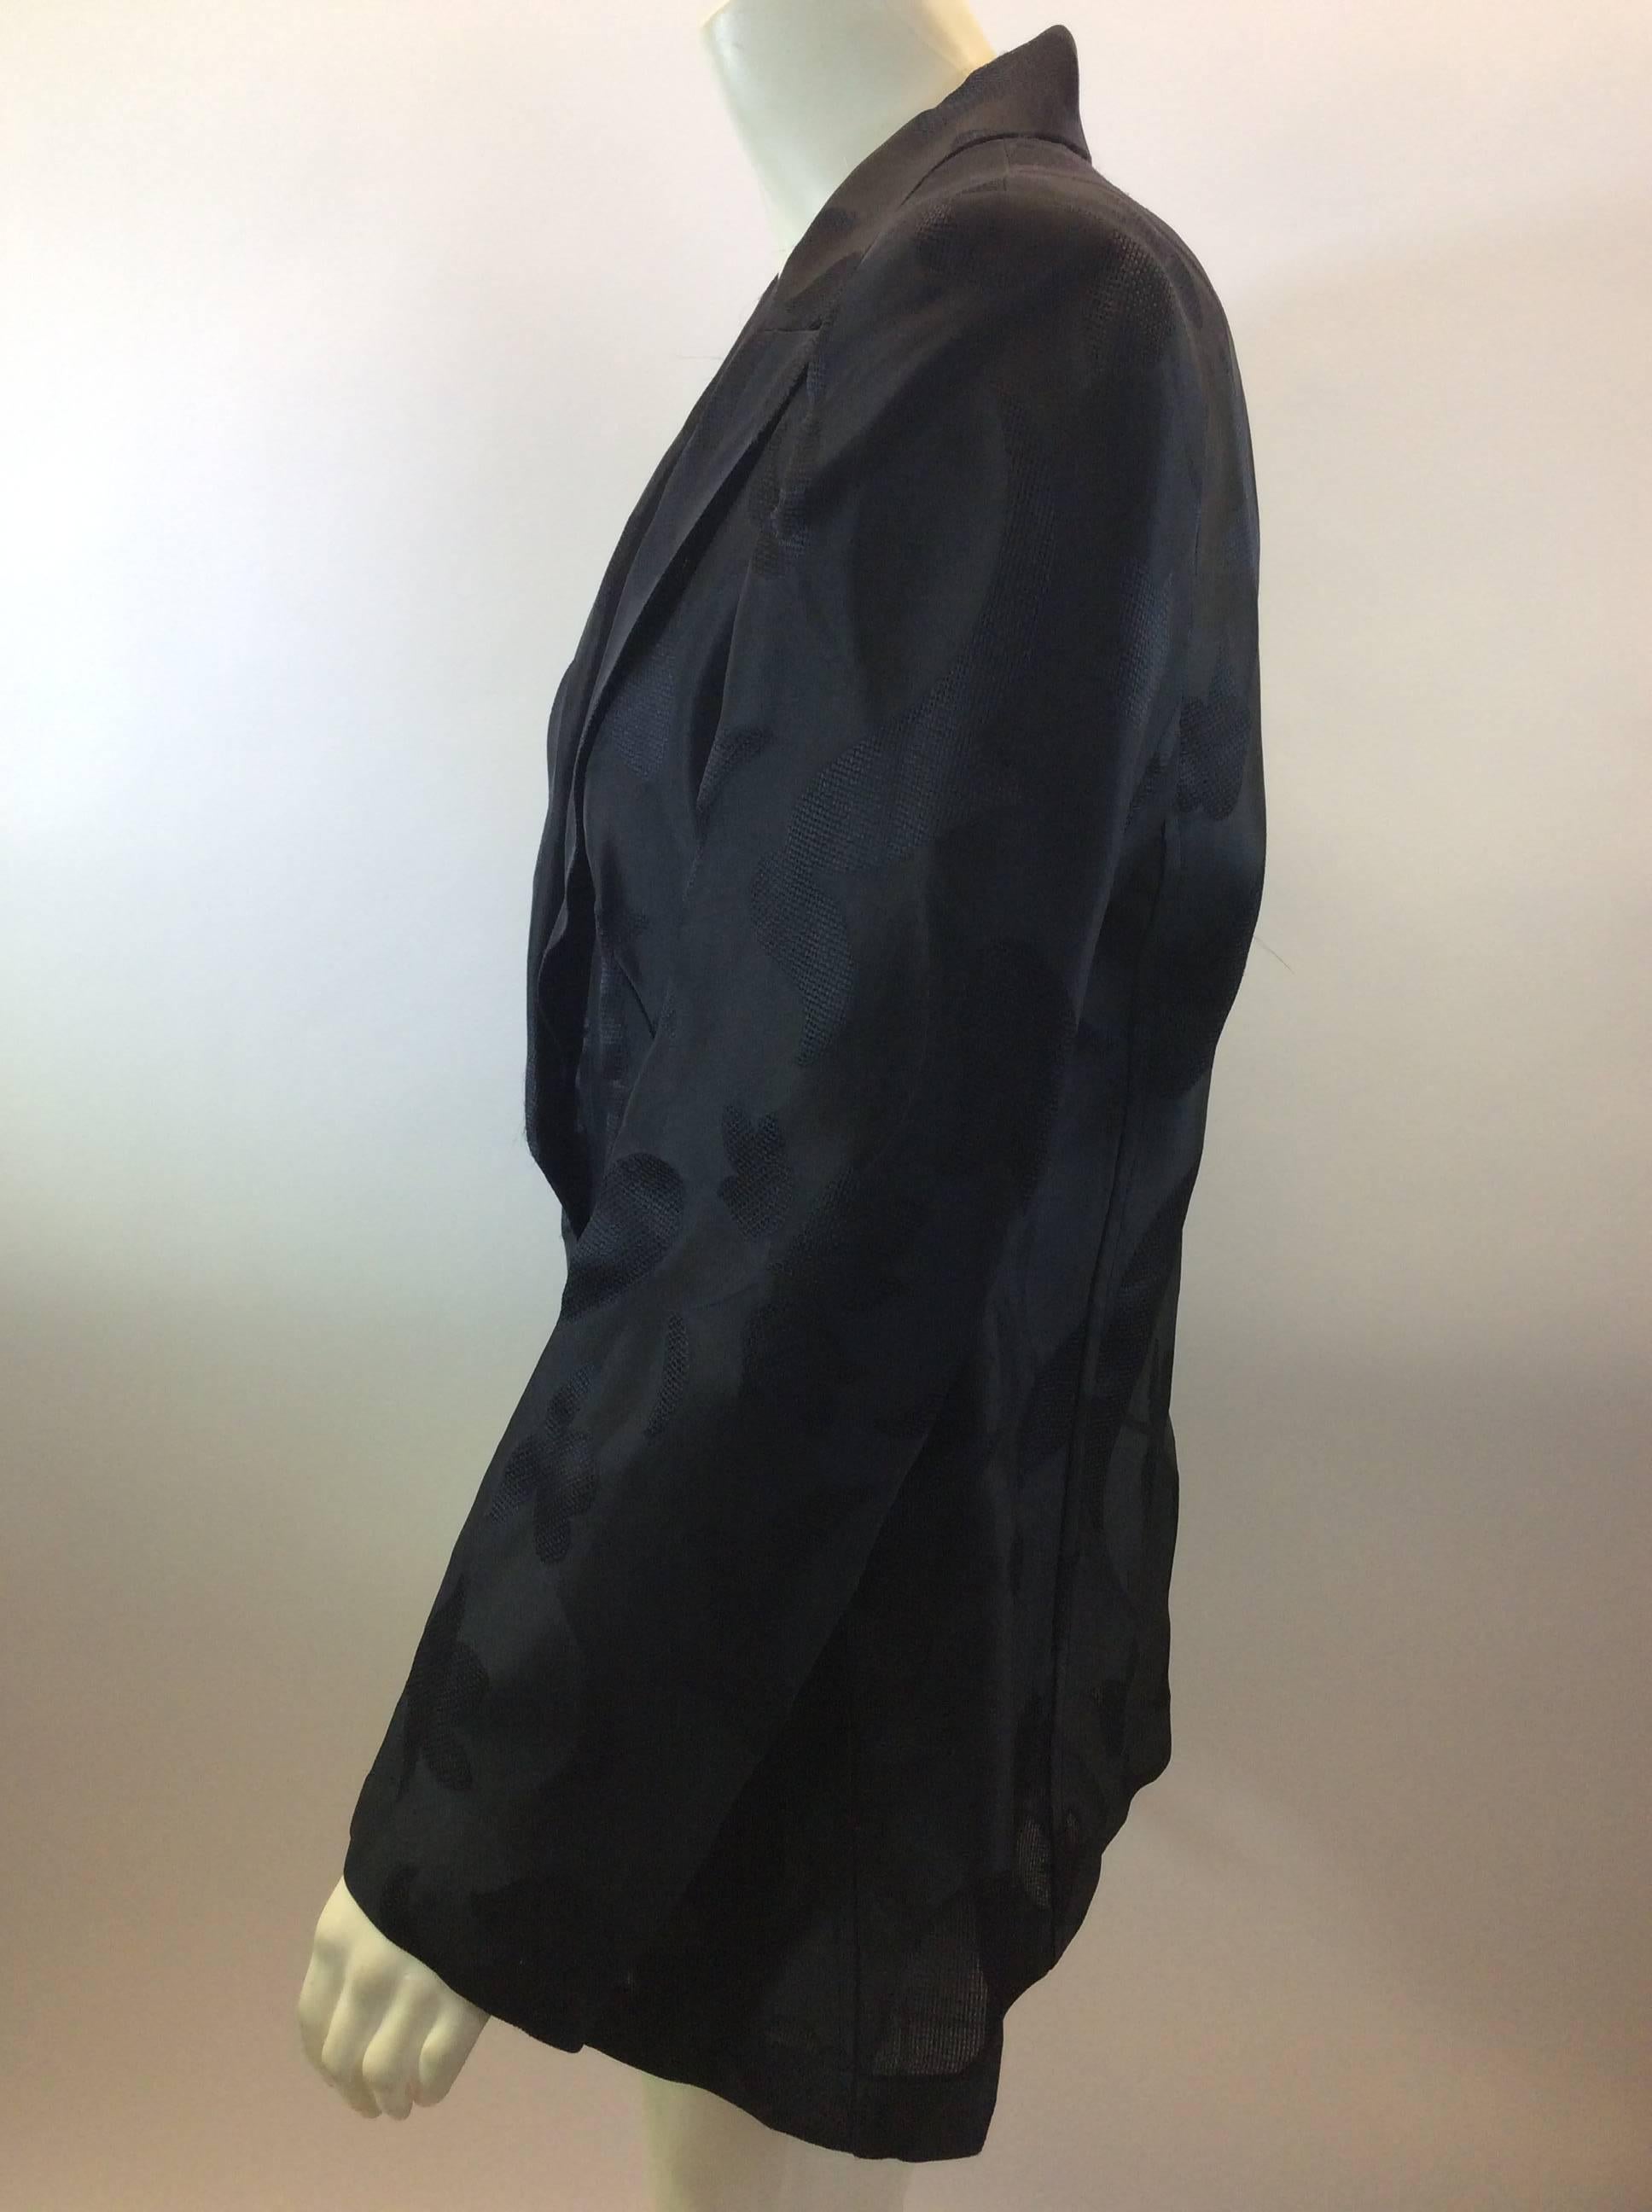 Giorgio Armani Black Detailed Jacket
$178
Made in Italy
60% Acetate
40% Silk
Lining- 100$ Silk
Size 10
Length 28